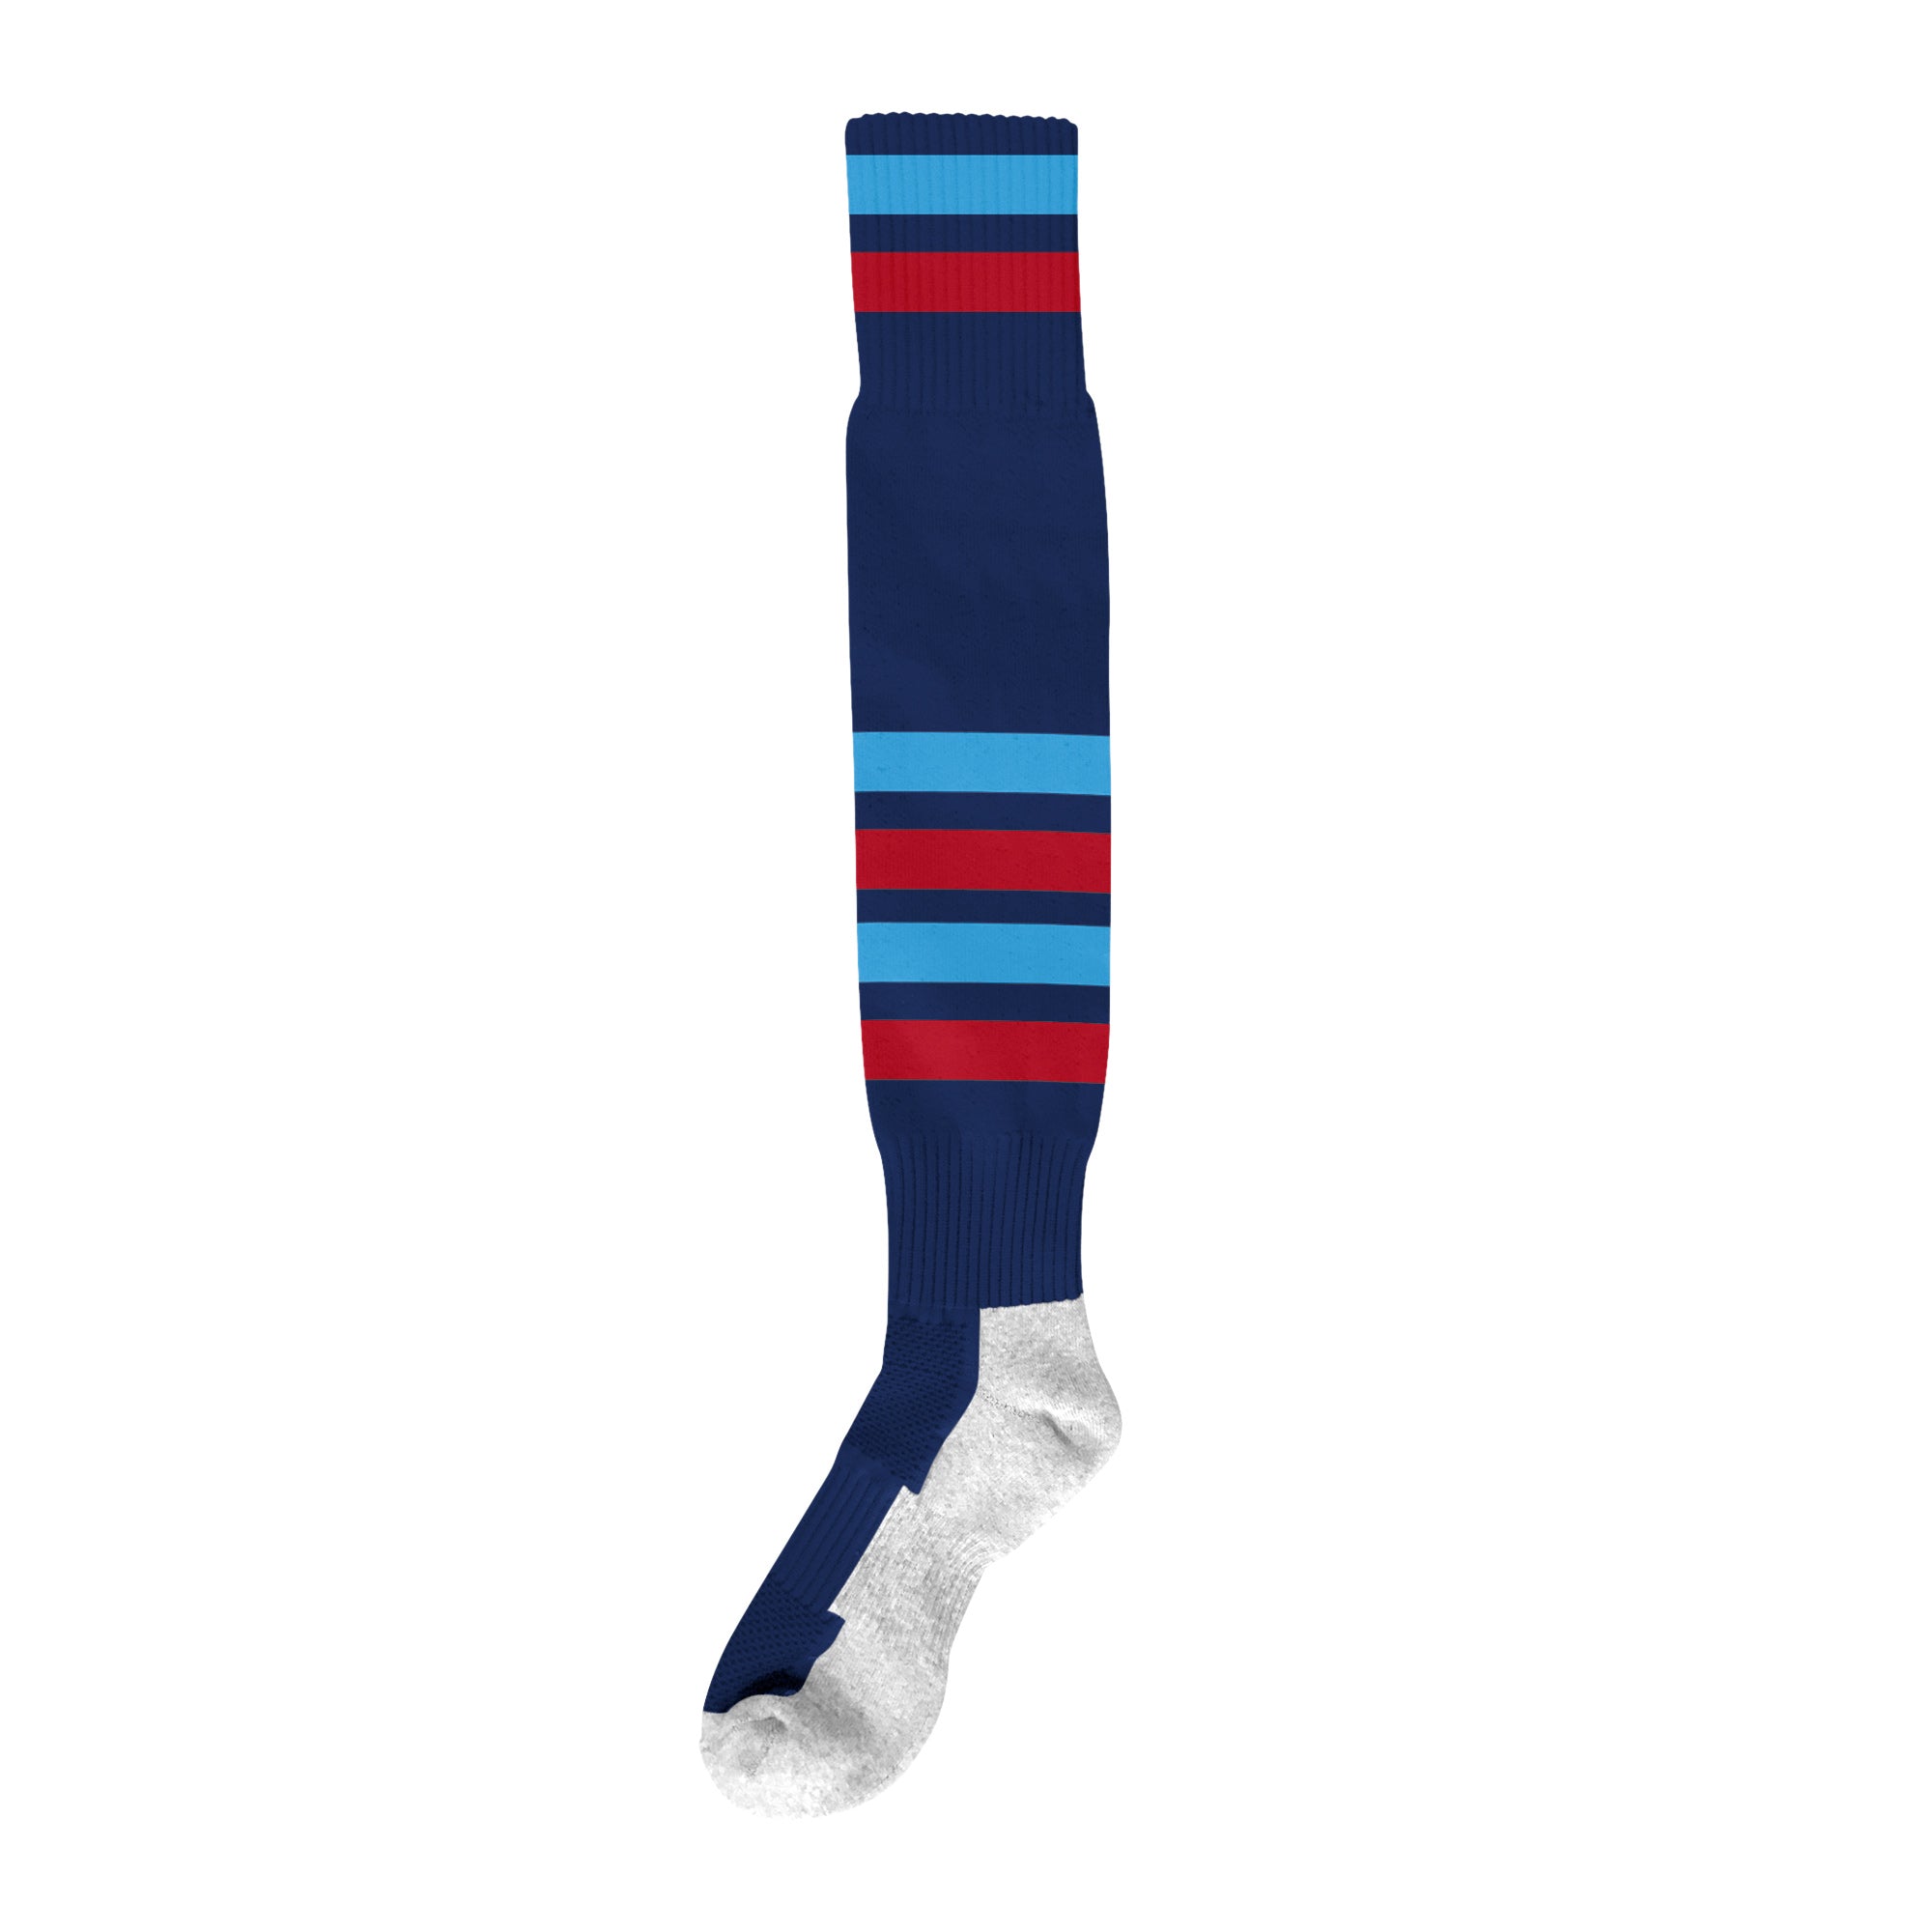 OGRFC Junior - Playing Socks